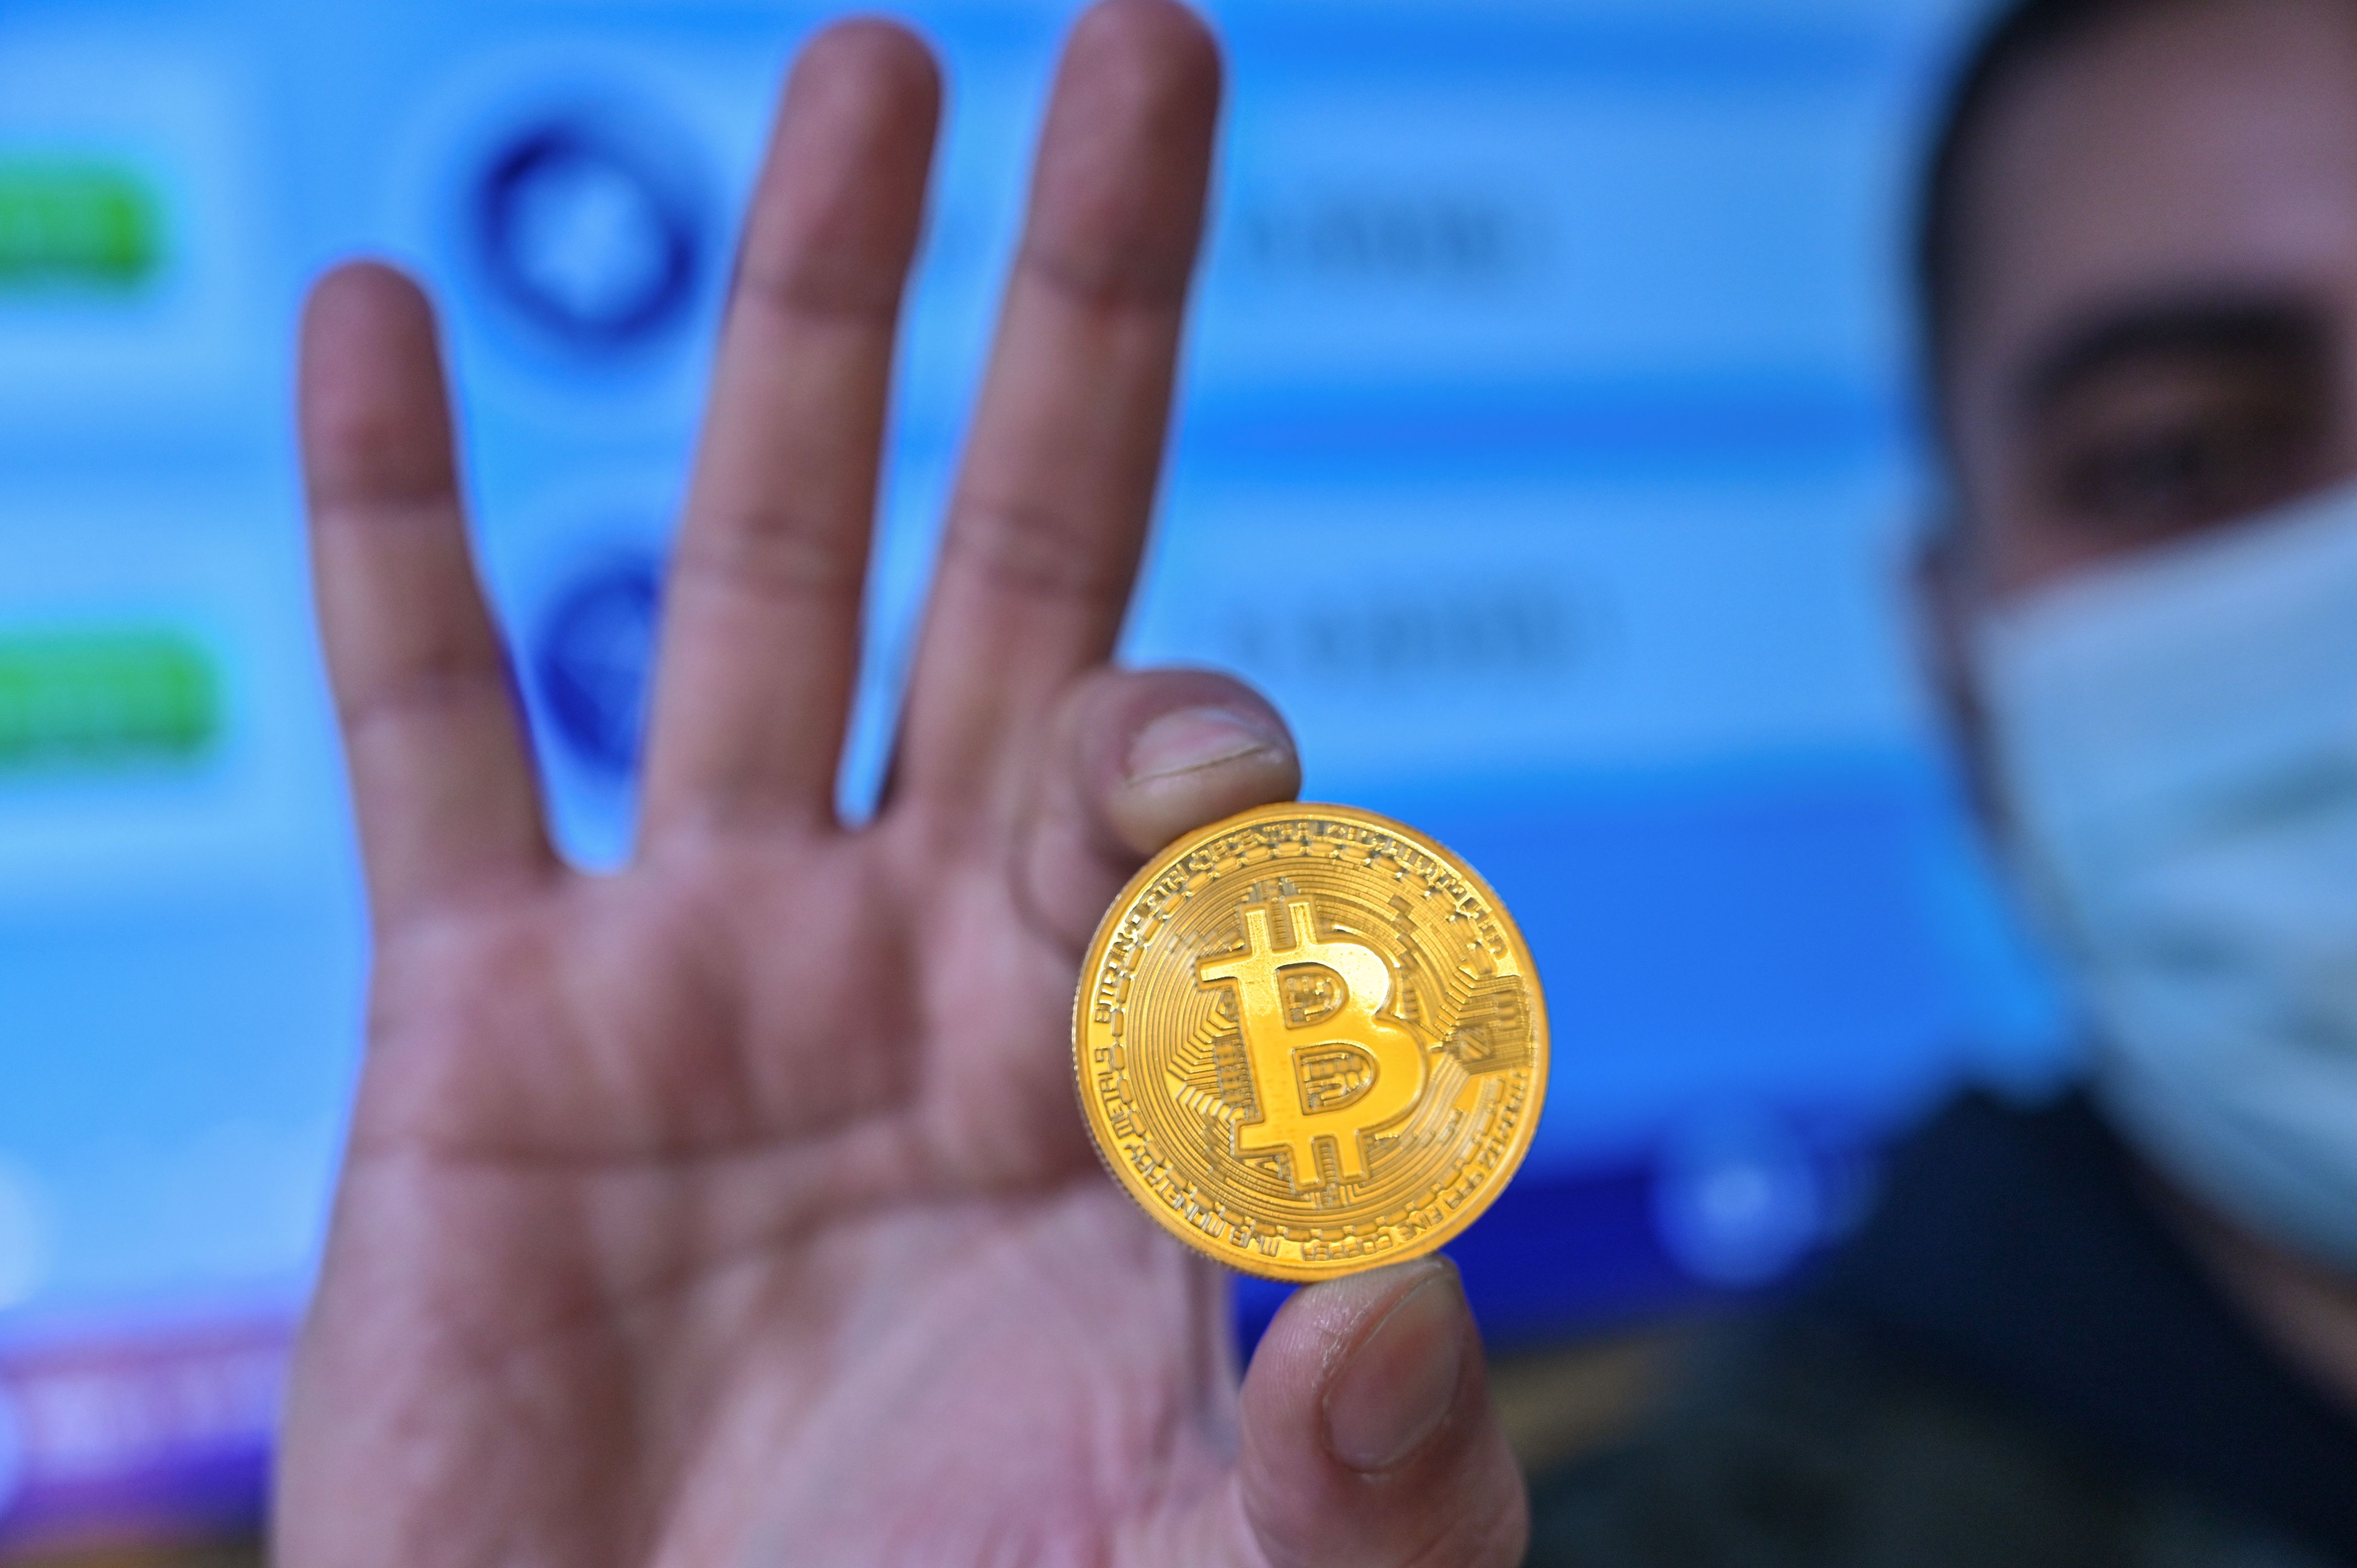 Jamie Dimon bashes bitcoin again, calling it ‘worthless’ | CNN Business